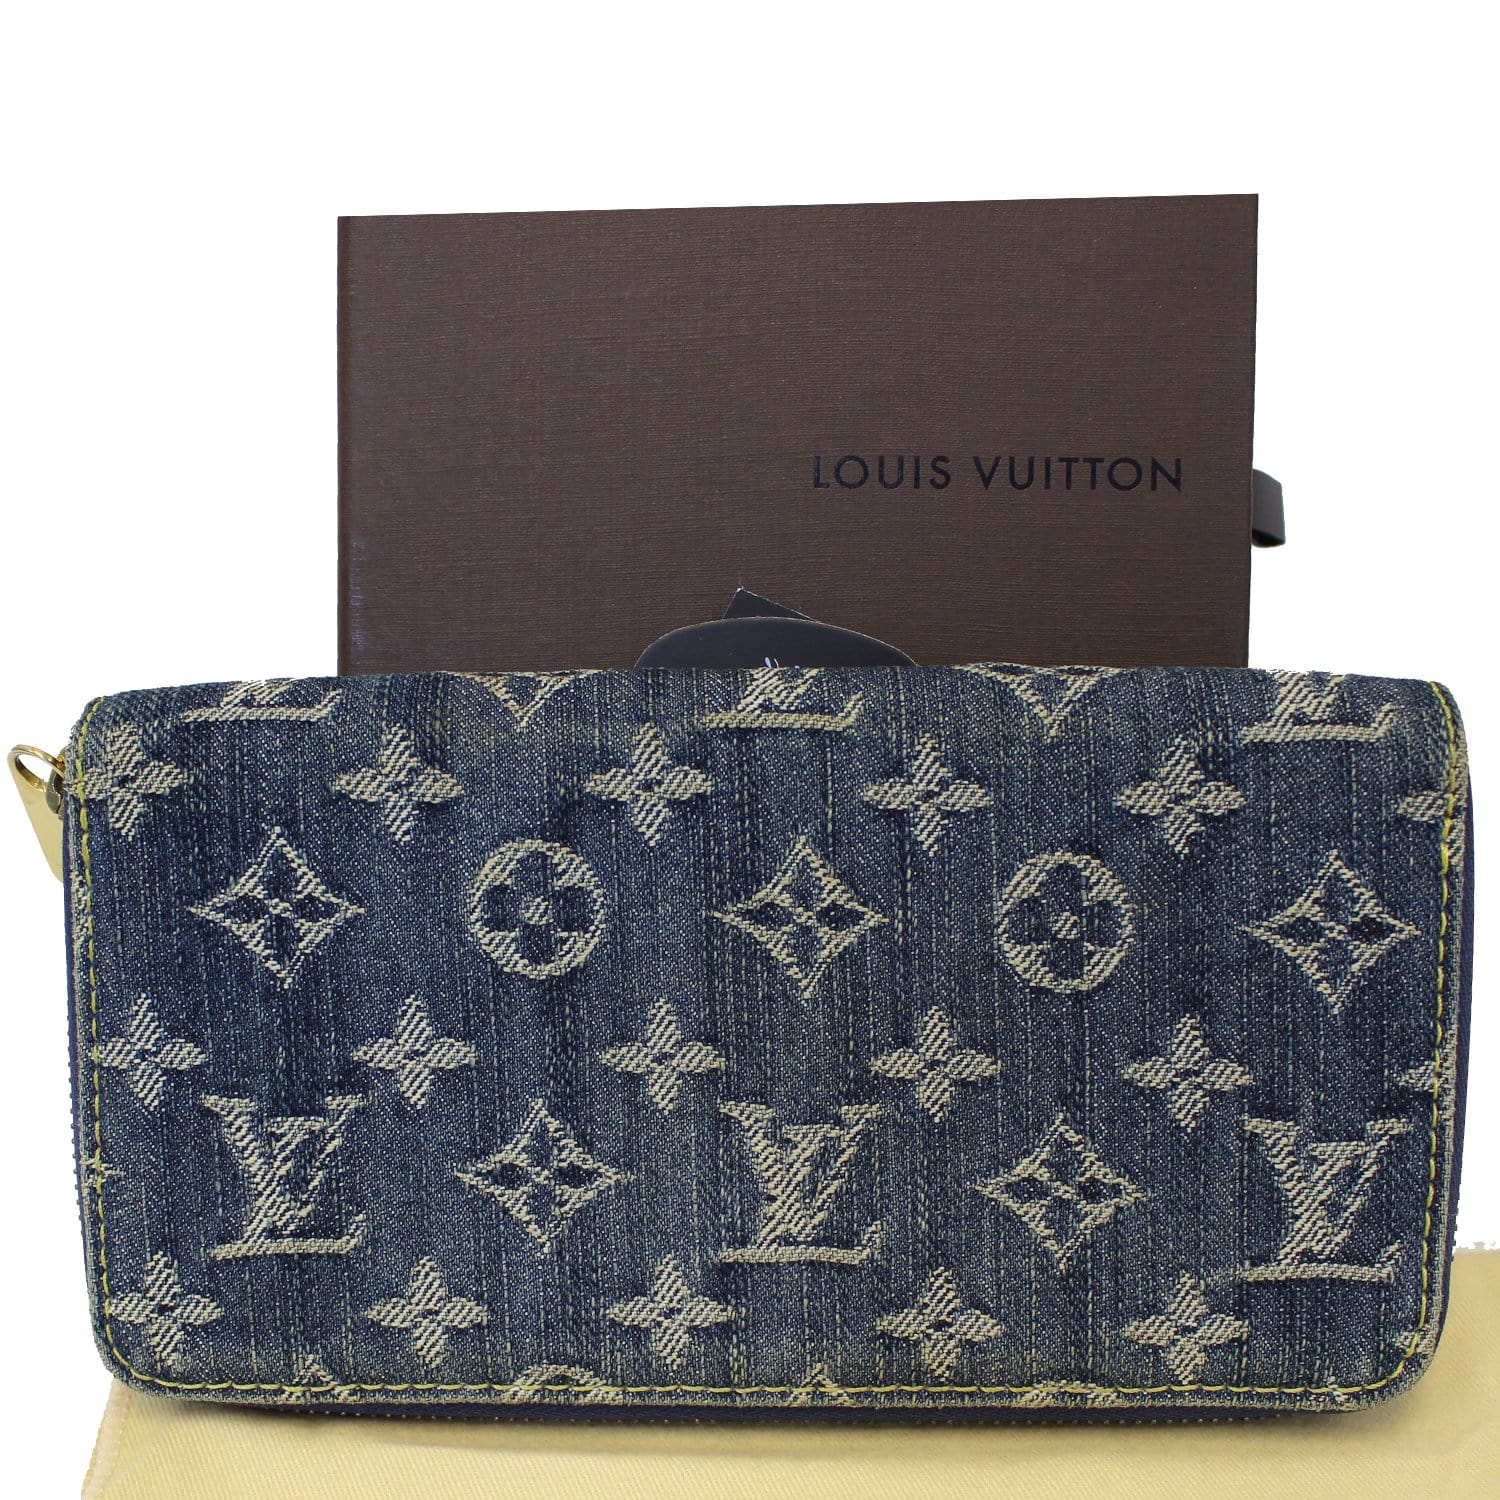 Buy Louis Vuitton Zippy Wallet Limited Edition Monogram 767702